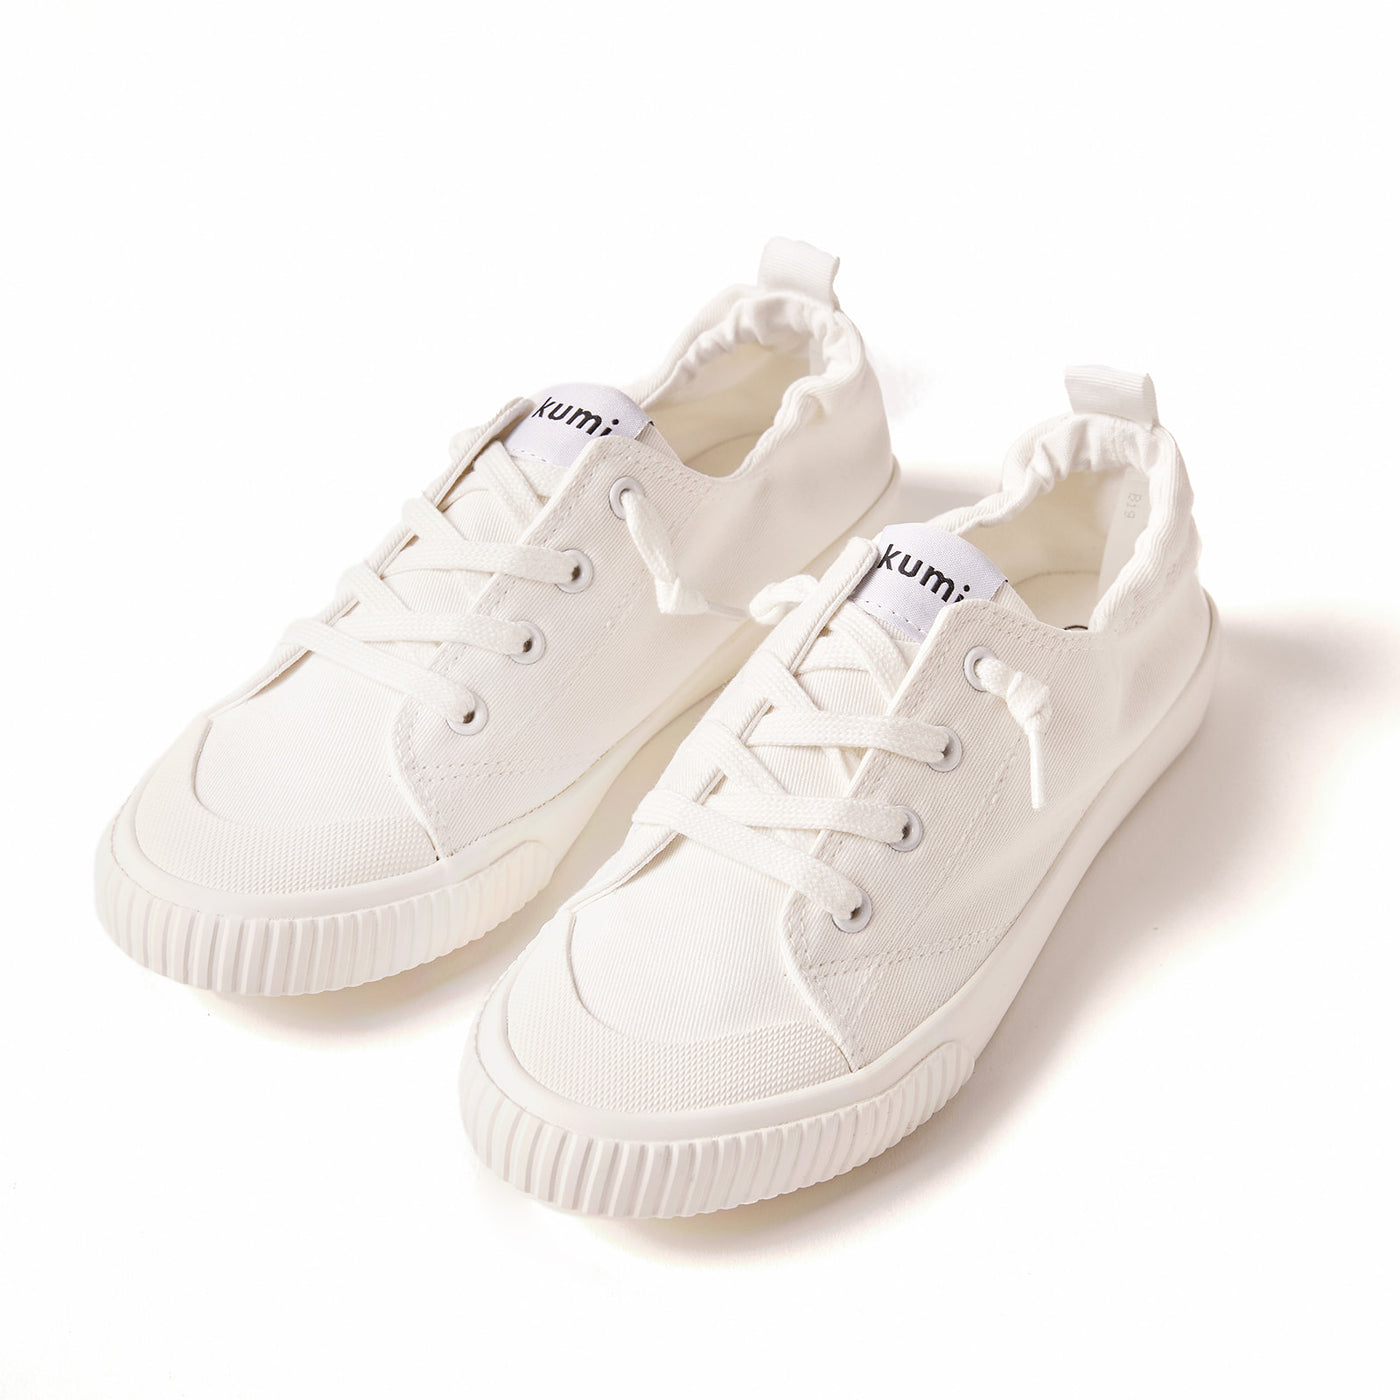 White Slip-On sneakers